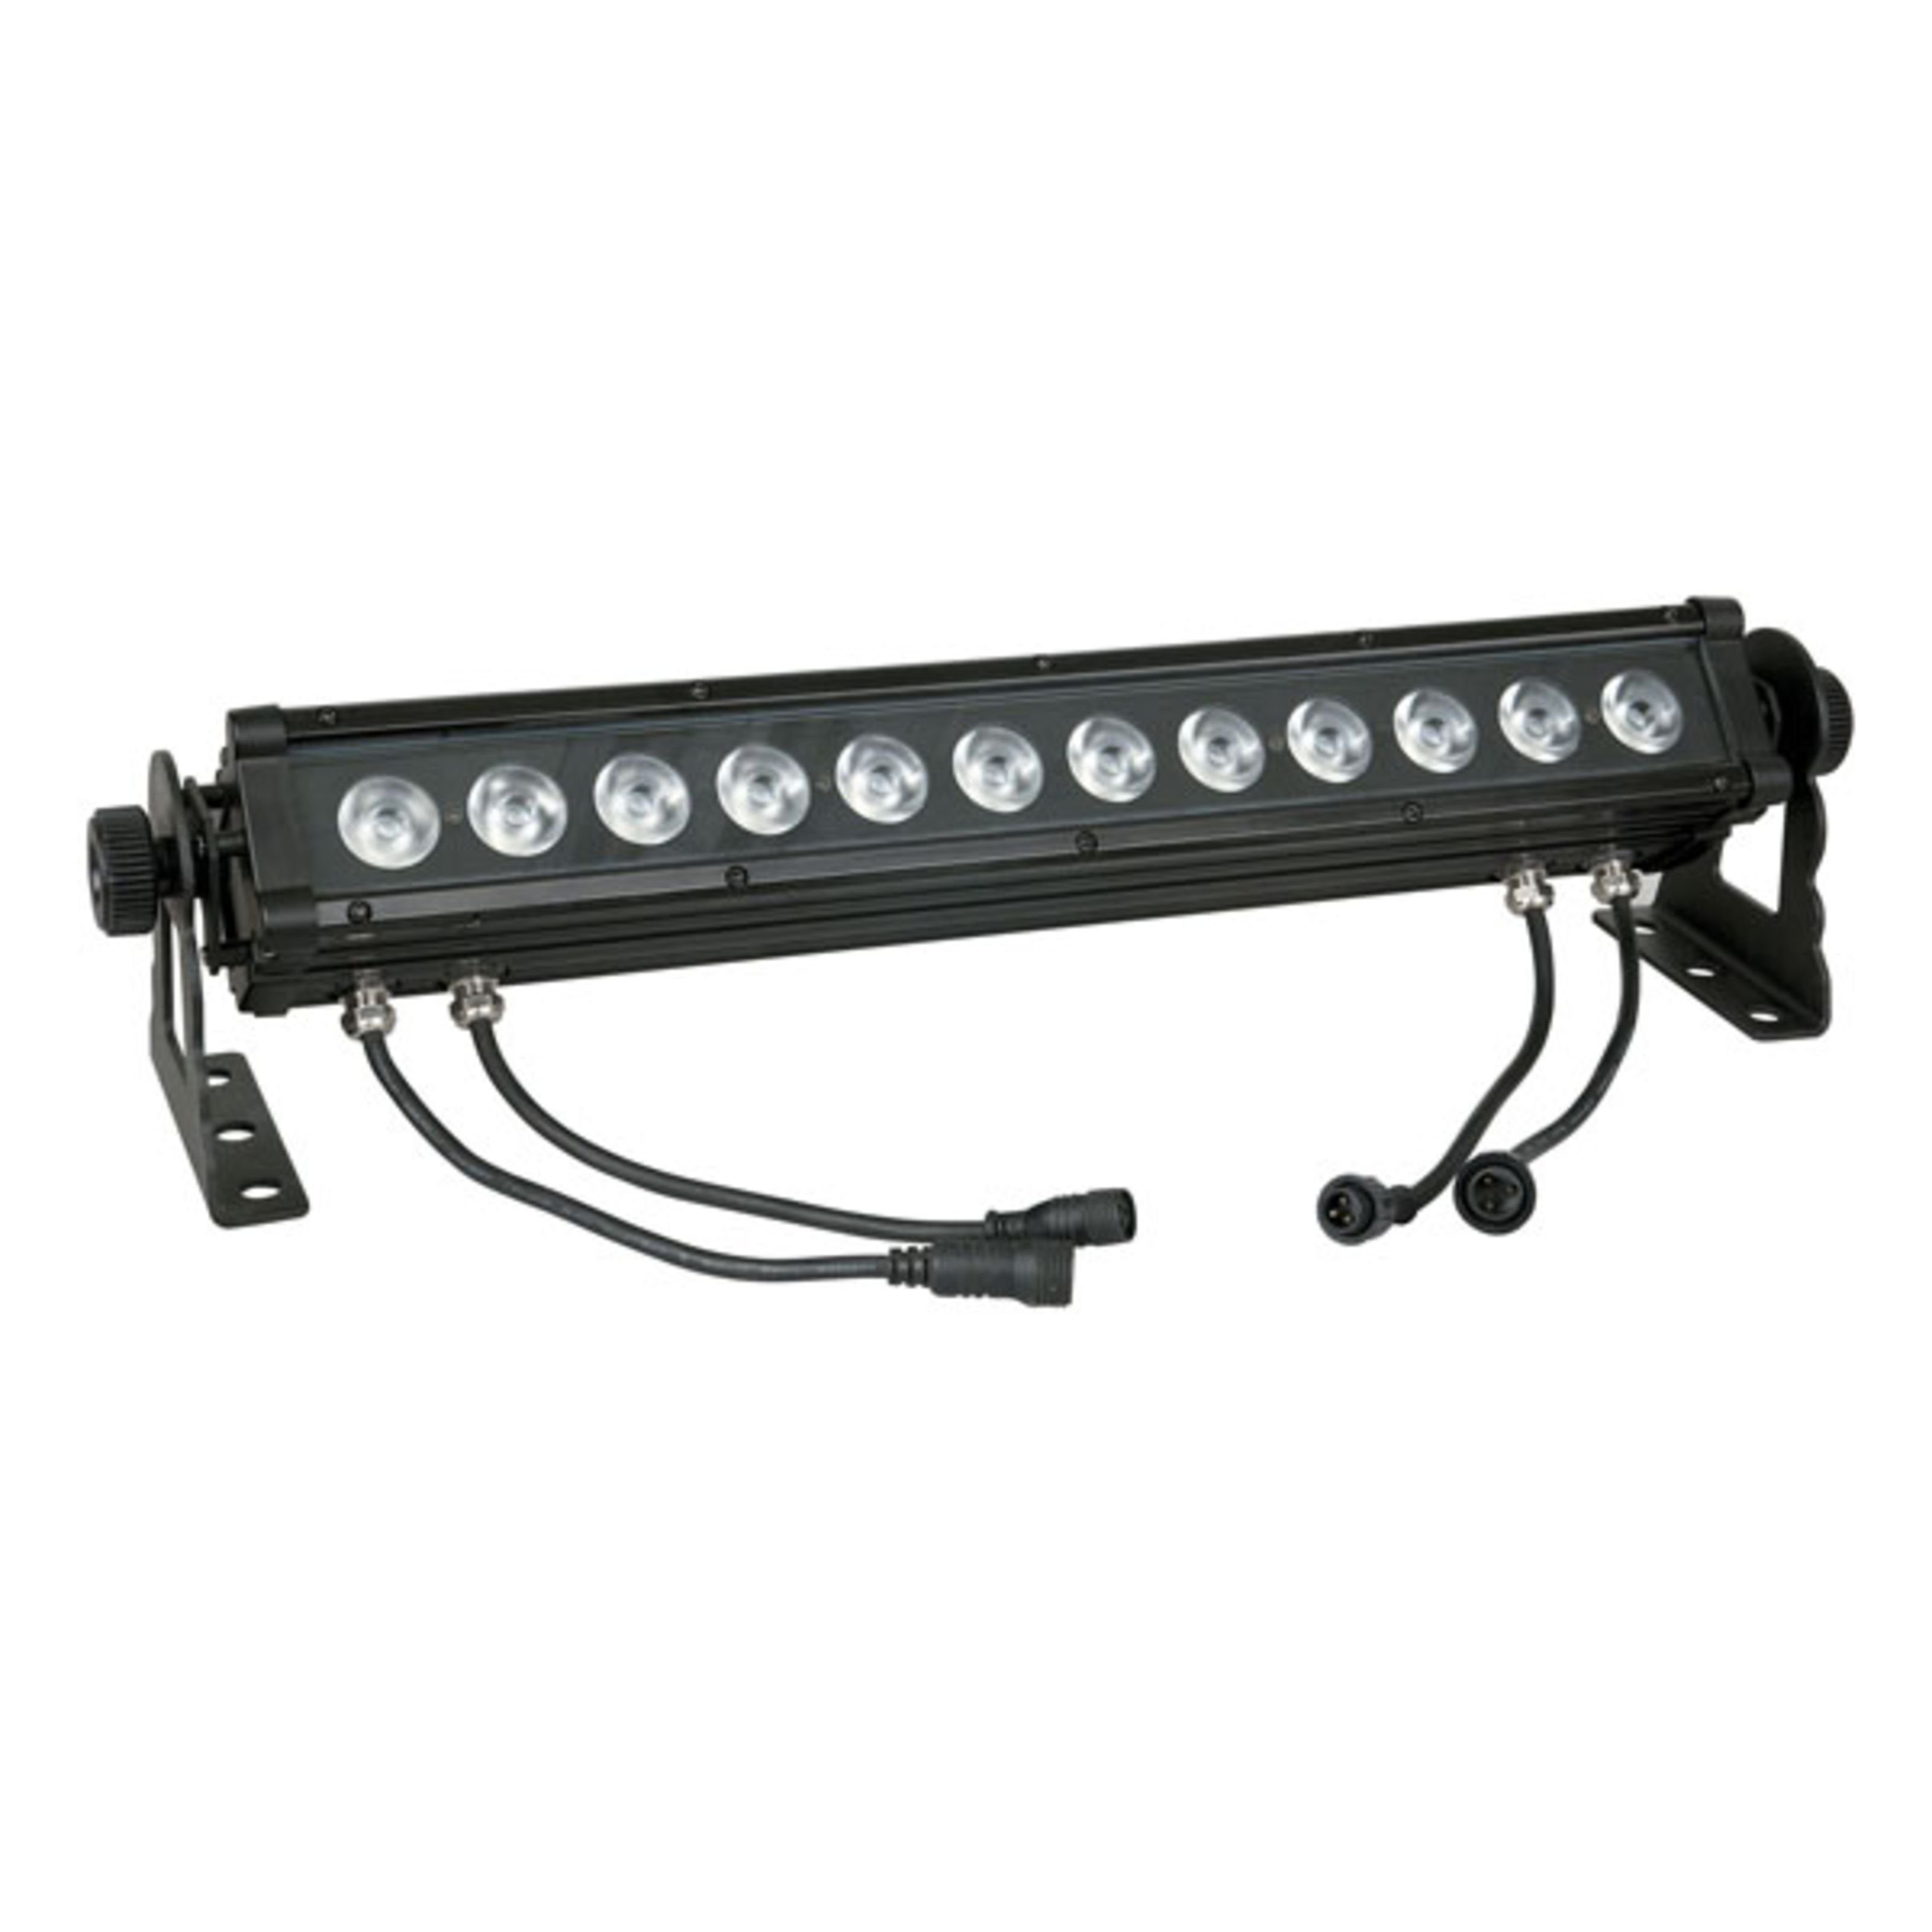 Show tec LED Discolicht, Cameleon Bar 12/3 IP-65, 12 x 3-in-1-RGB-LED - LED Bar